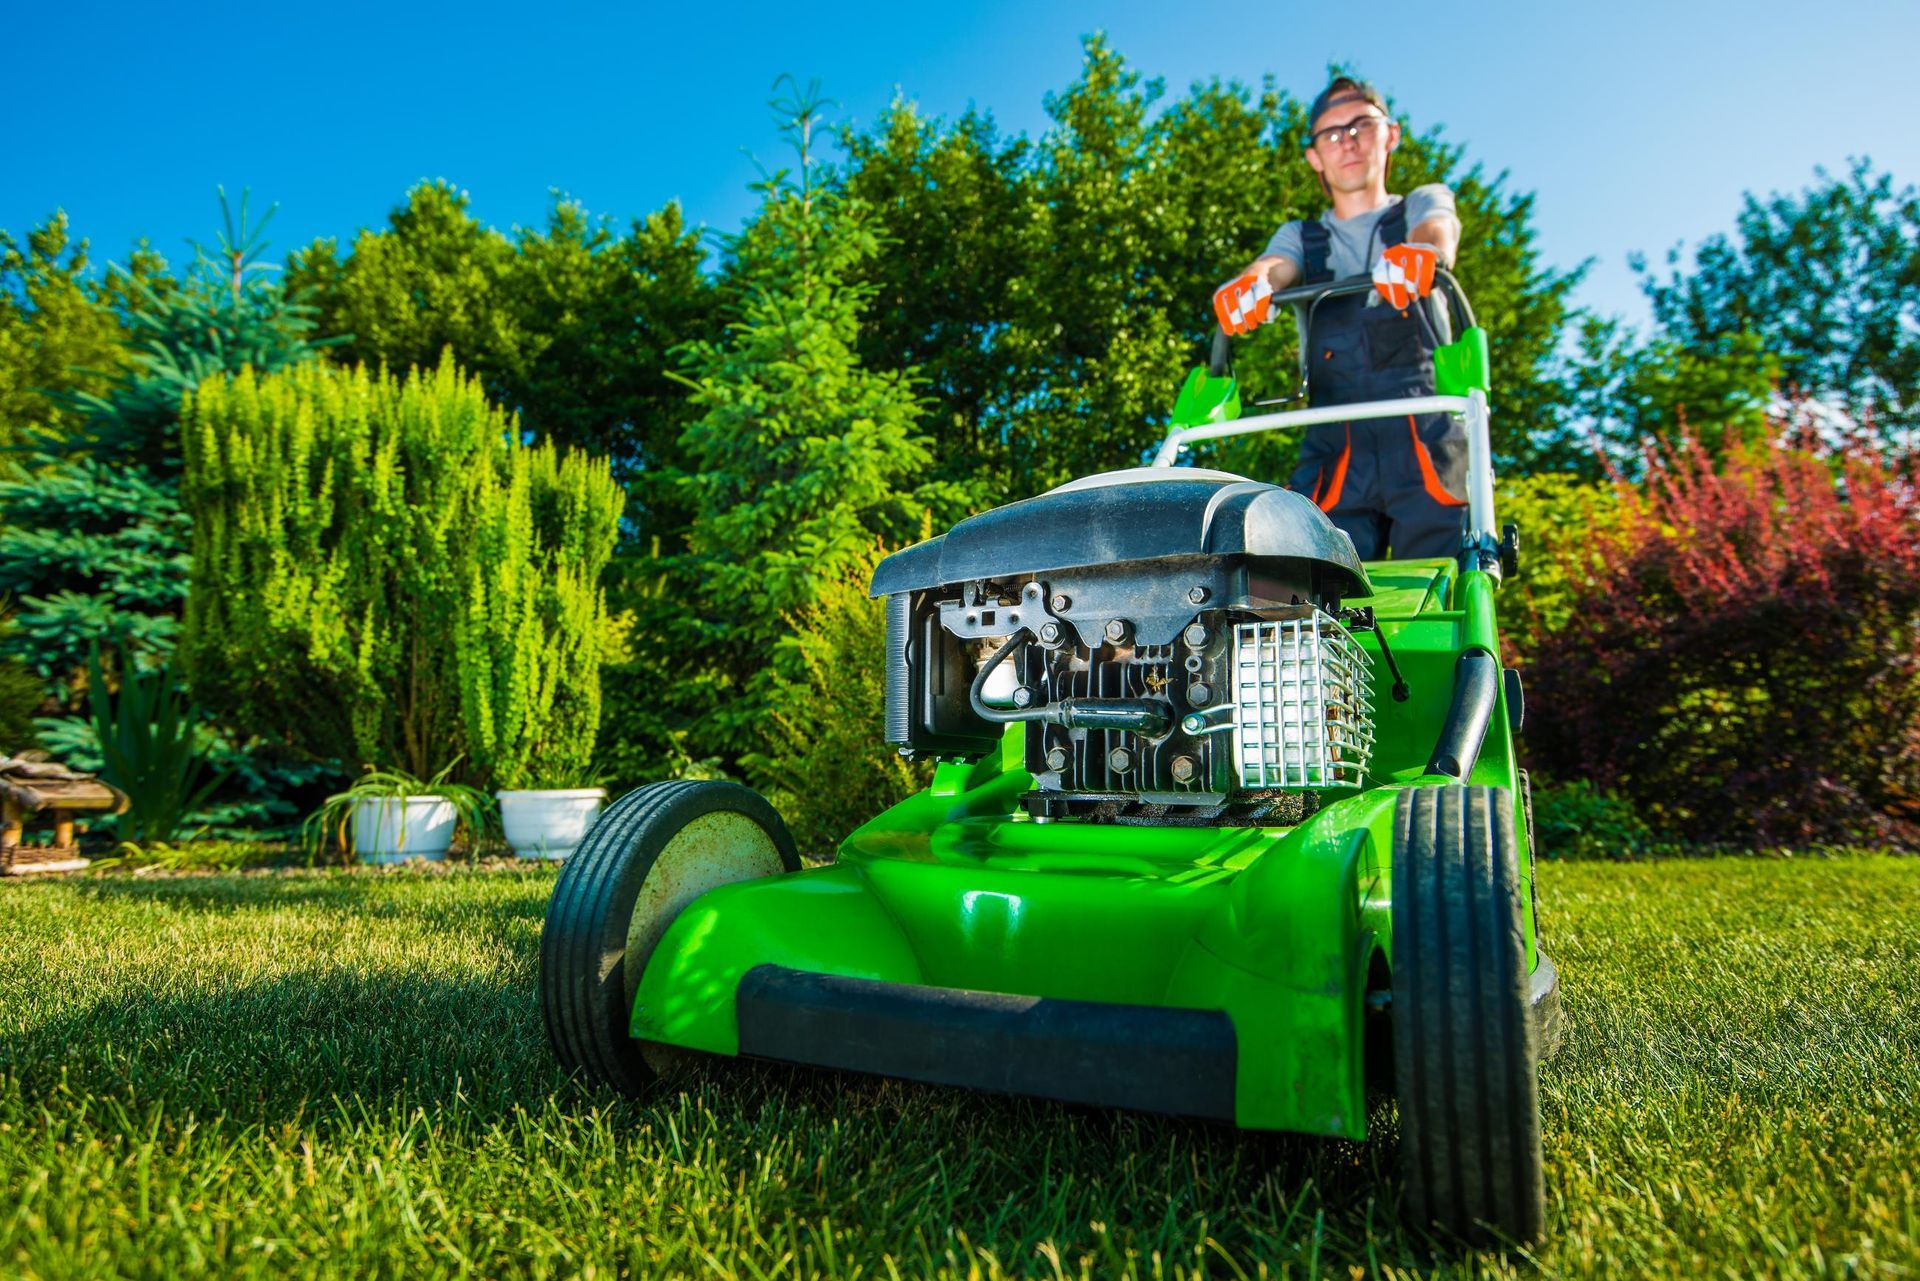 A man is riding a green lawn mower on a lush green lawn.